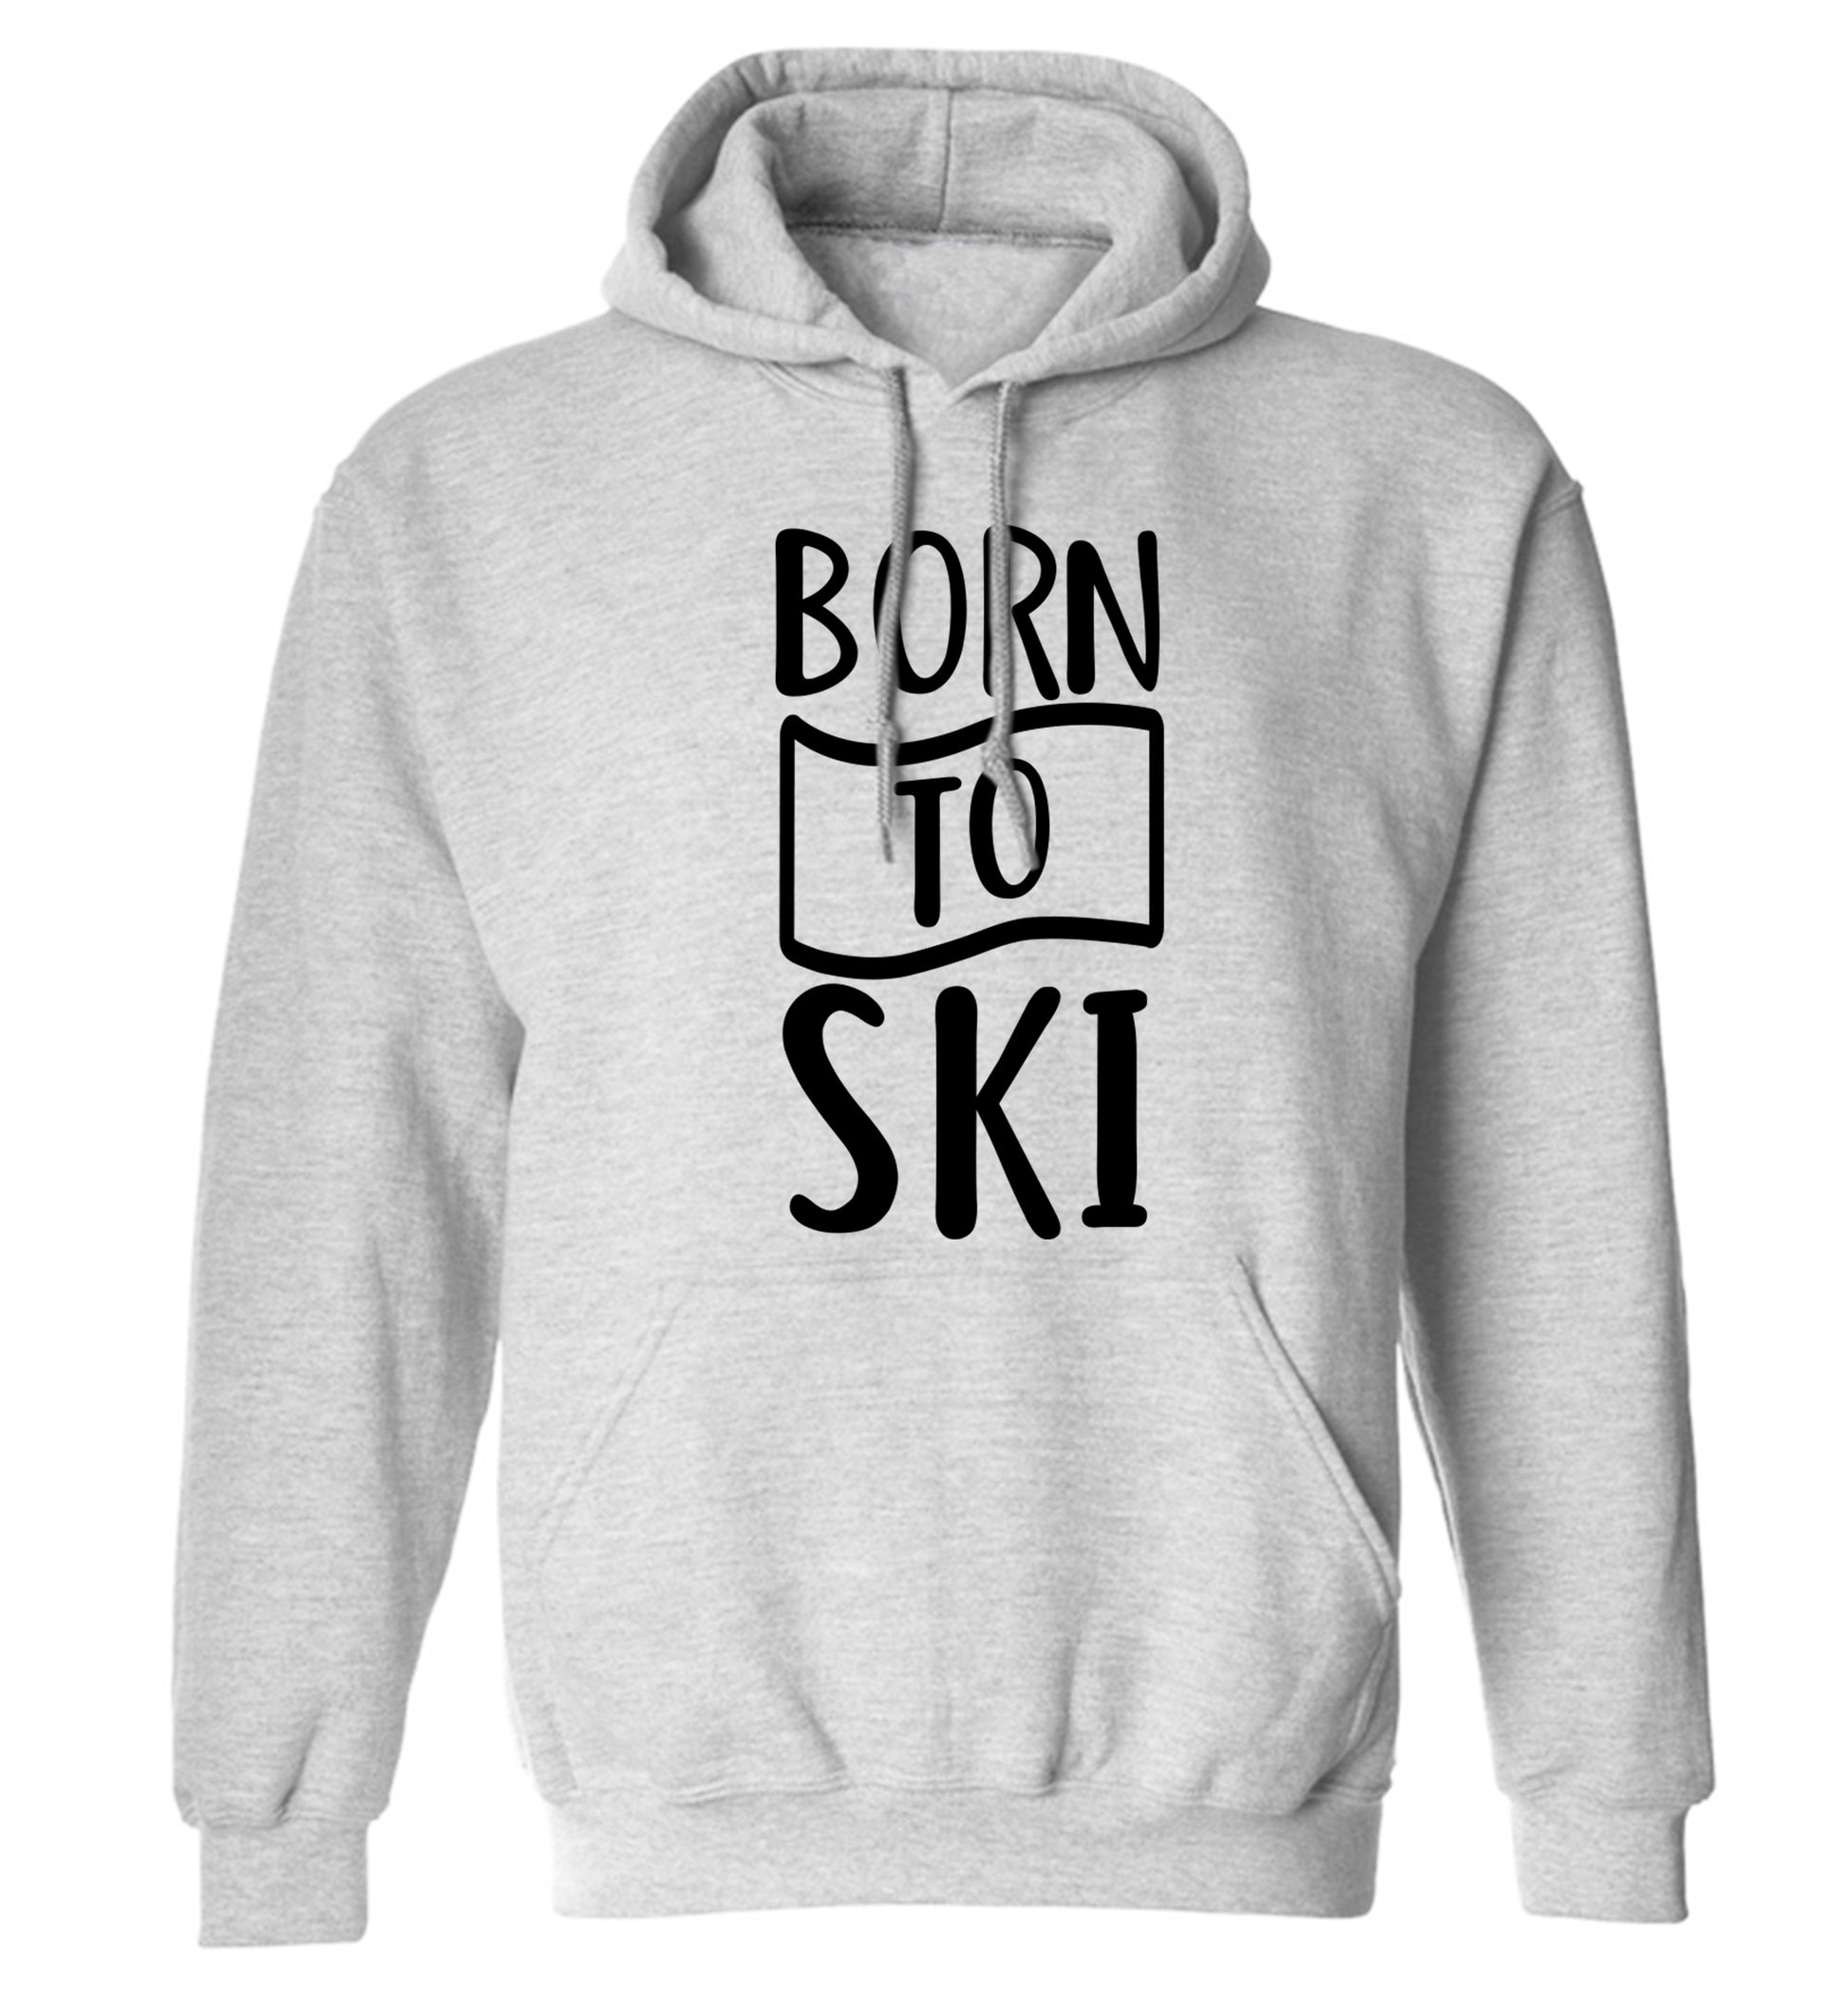 Born to ski adults unisexgrey hoodie 2XL